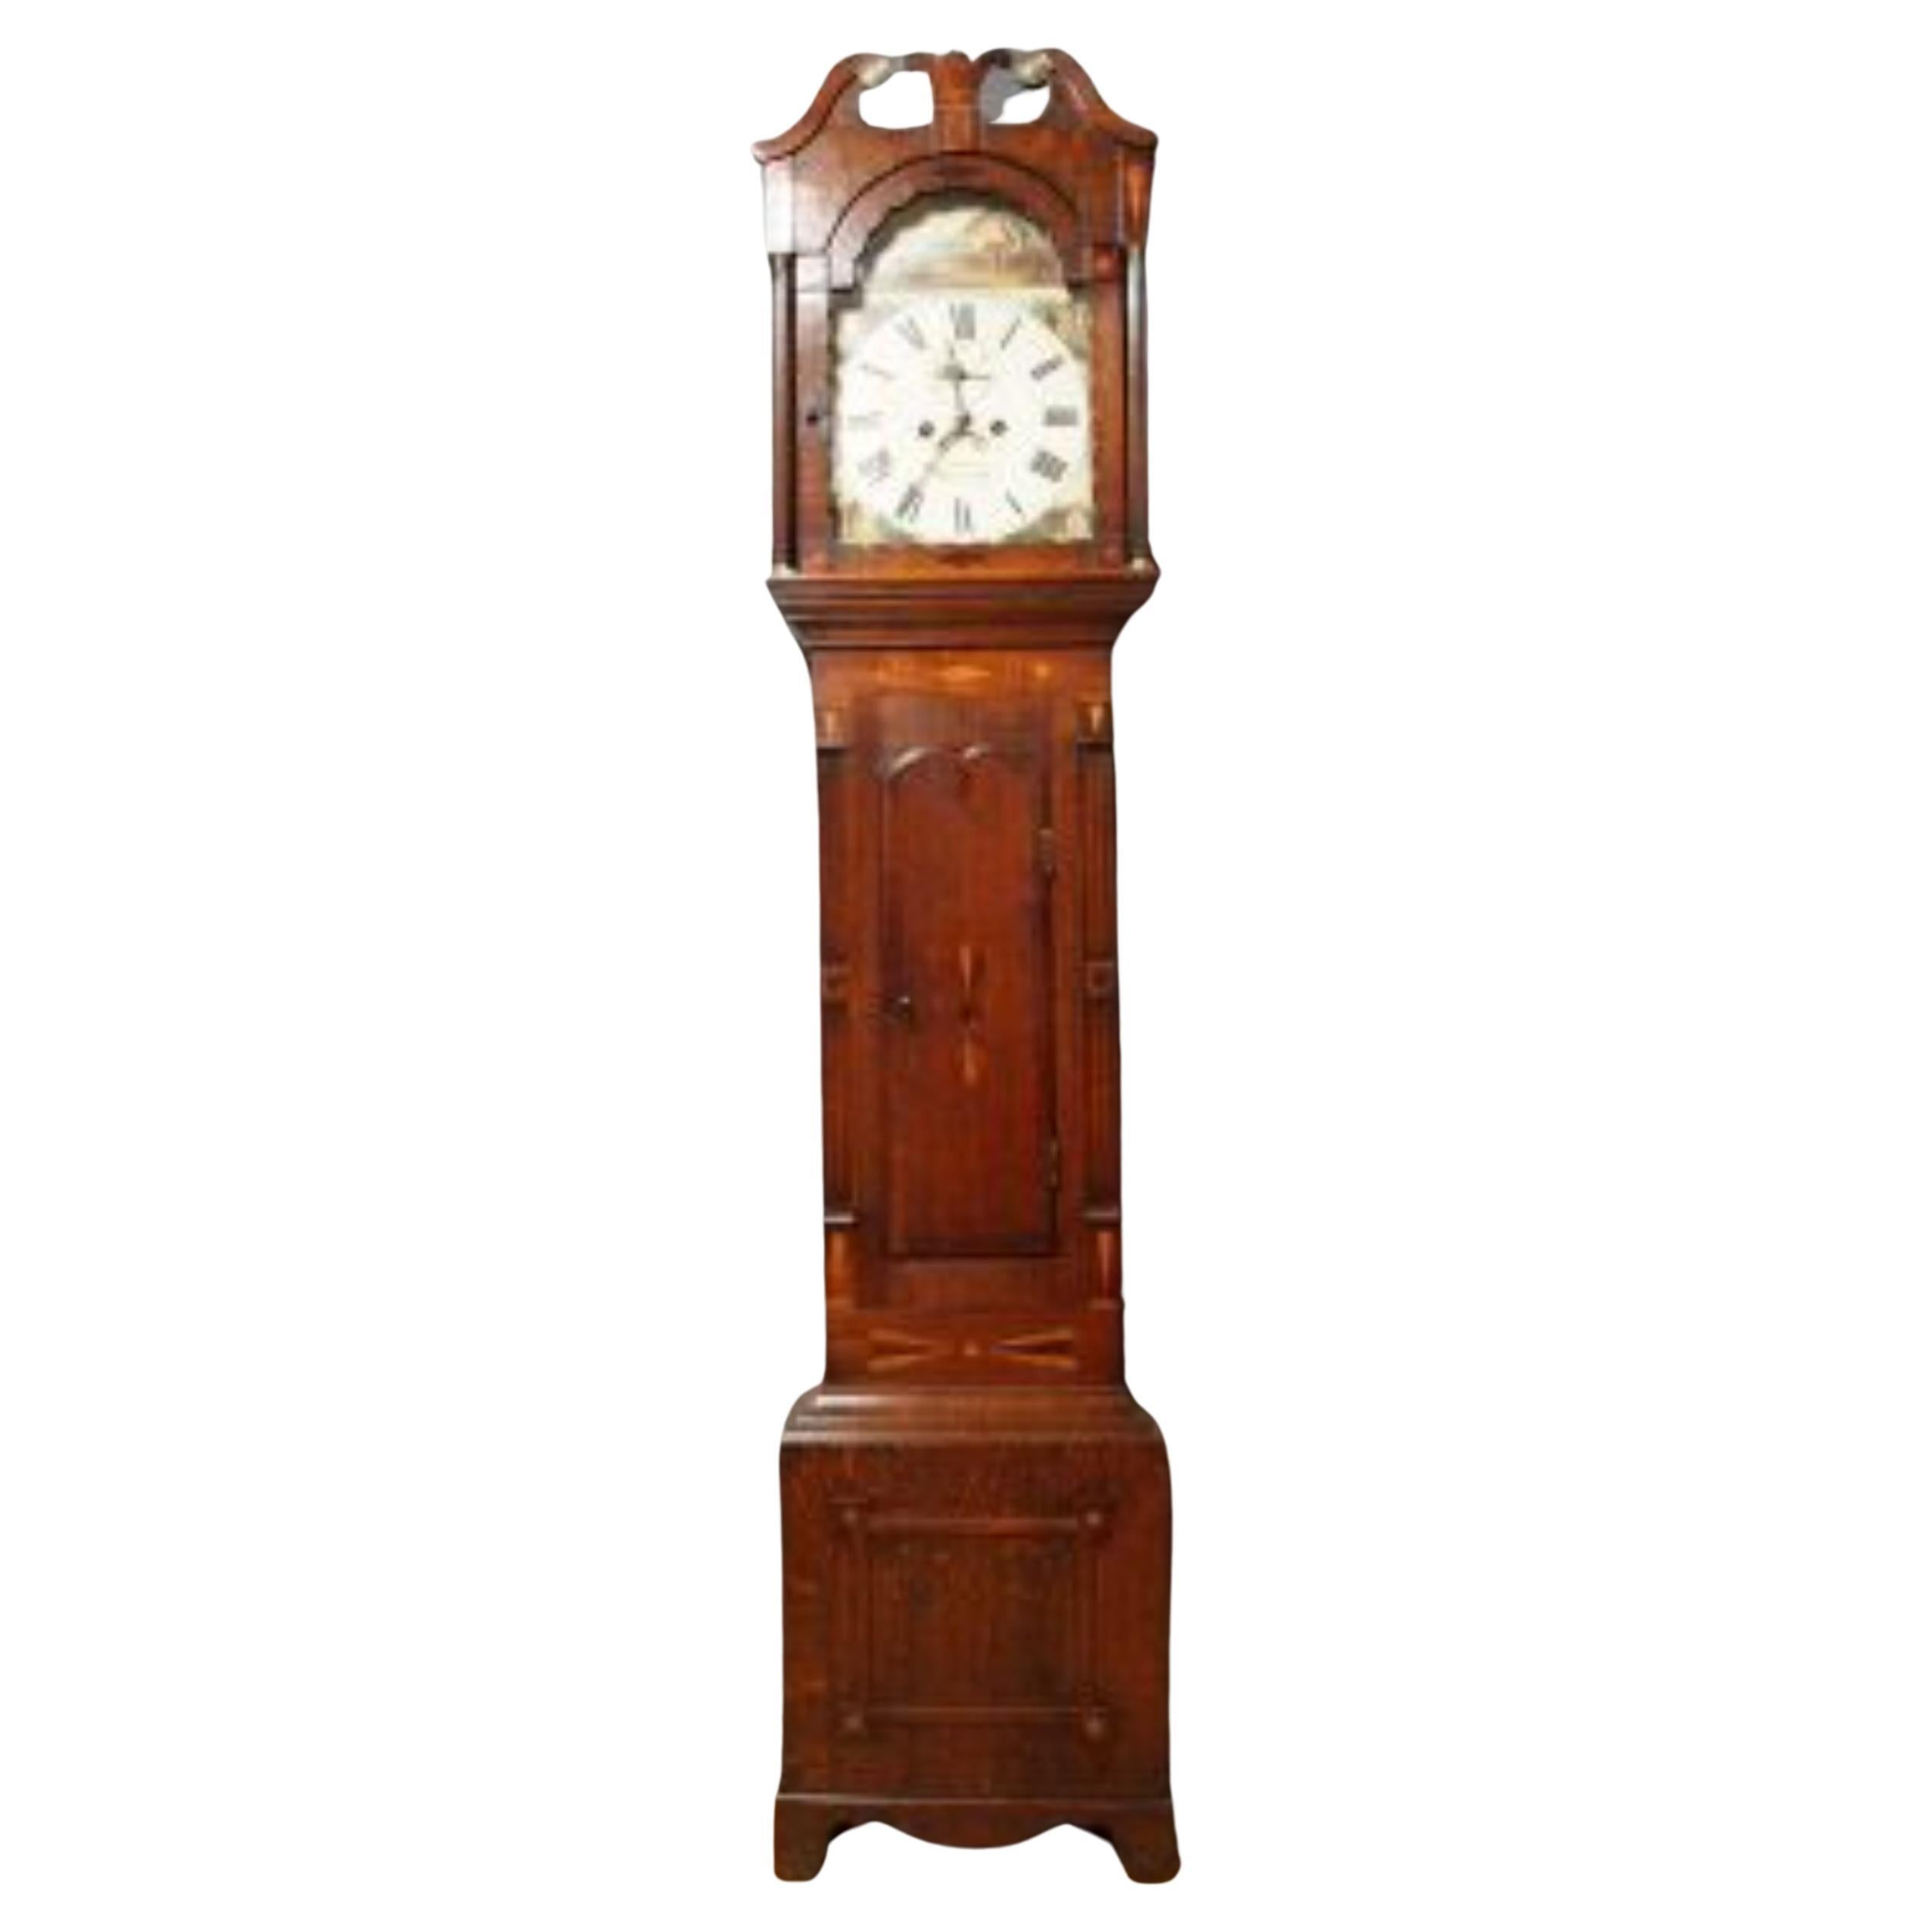 William IV Longcase Clock by Hillier, Basignstoke